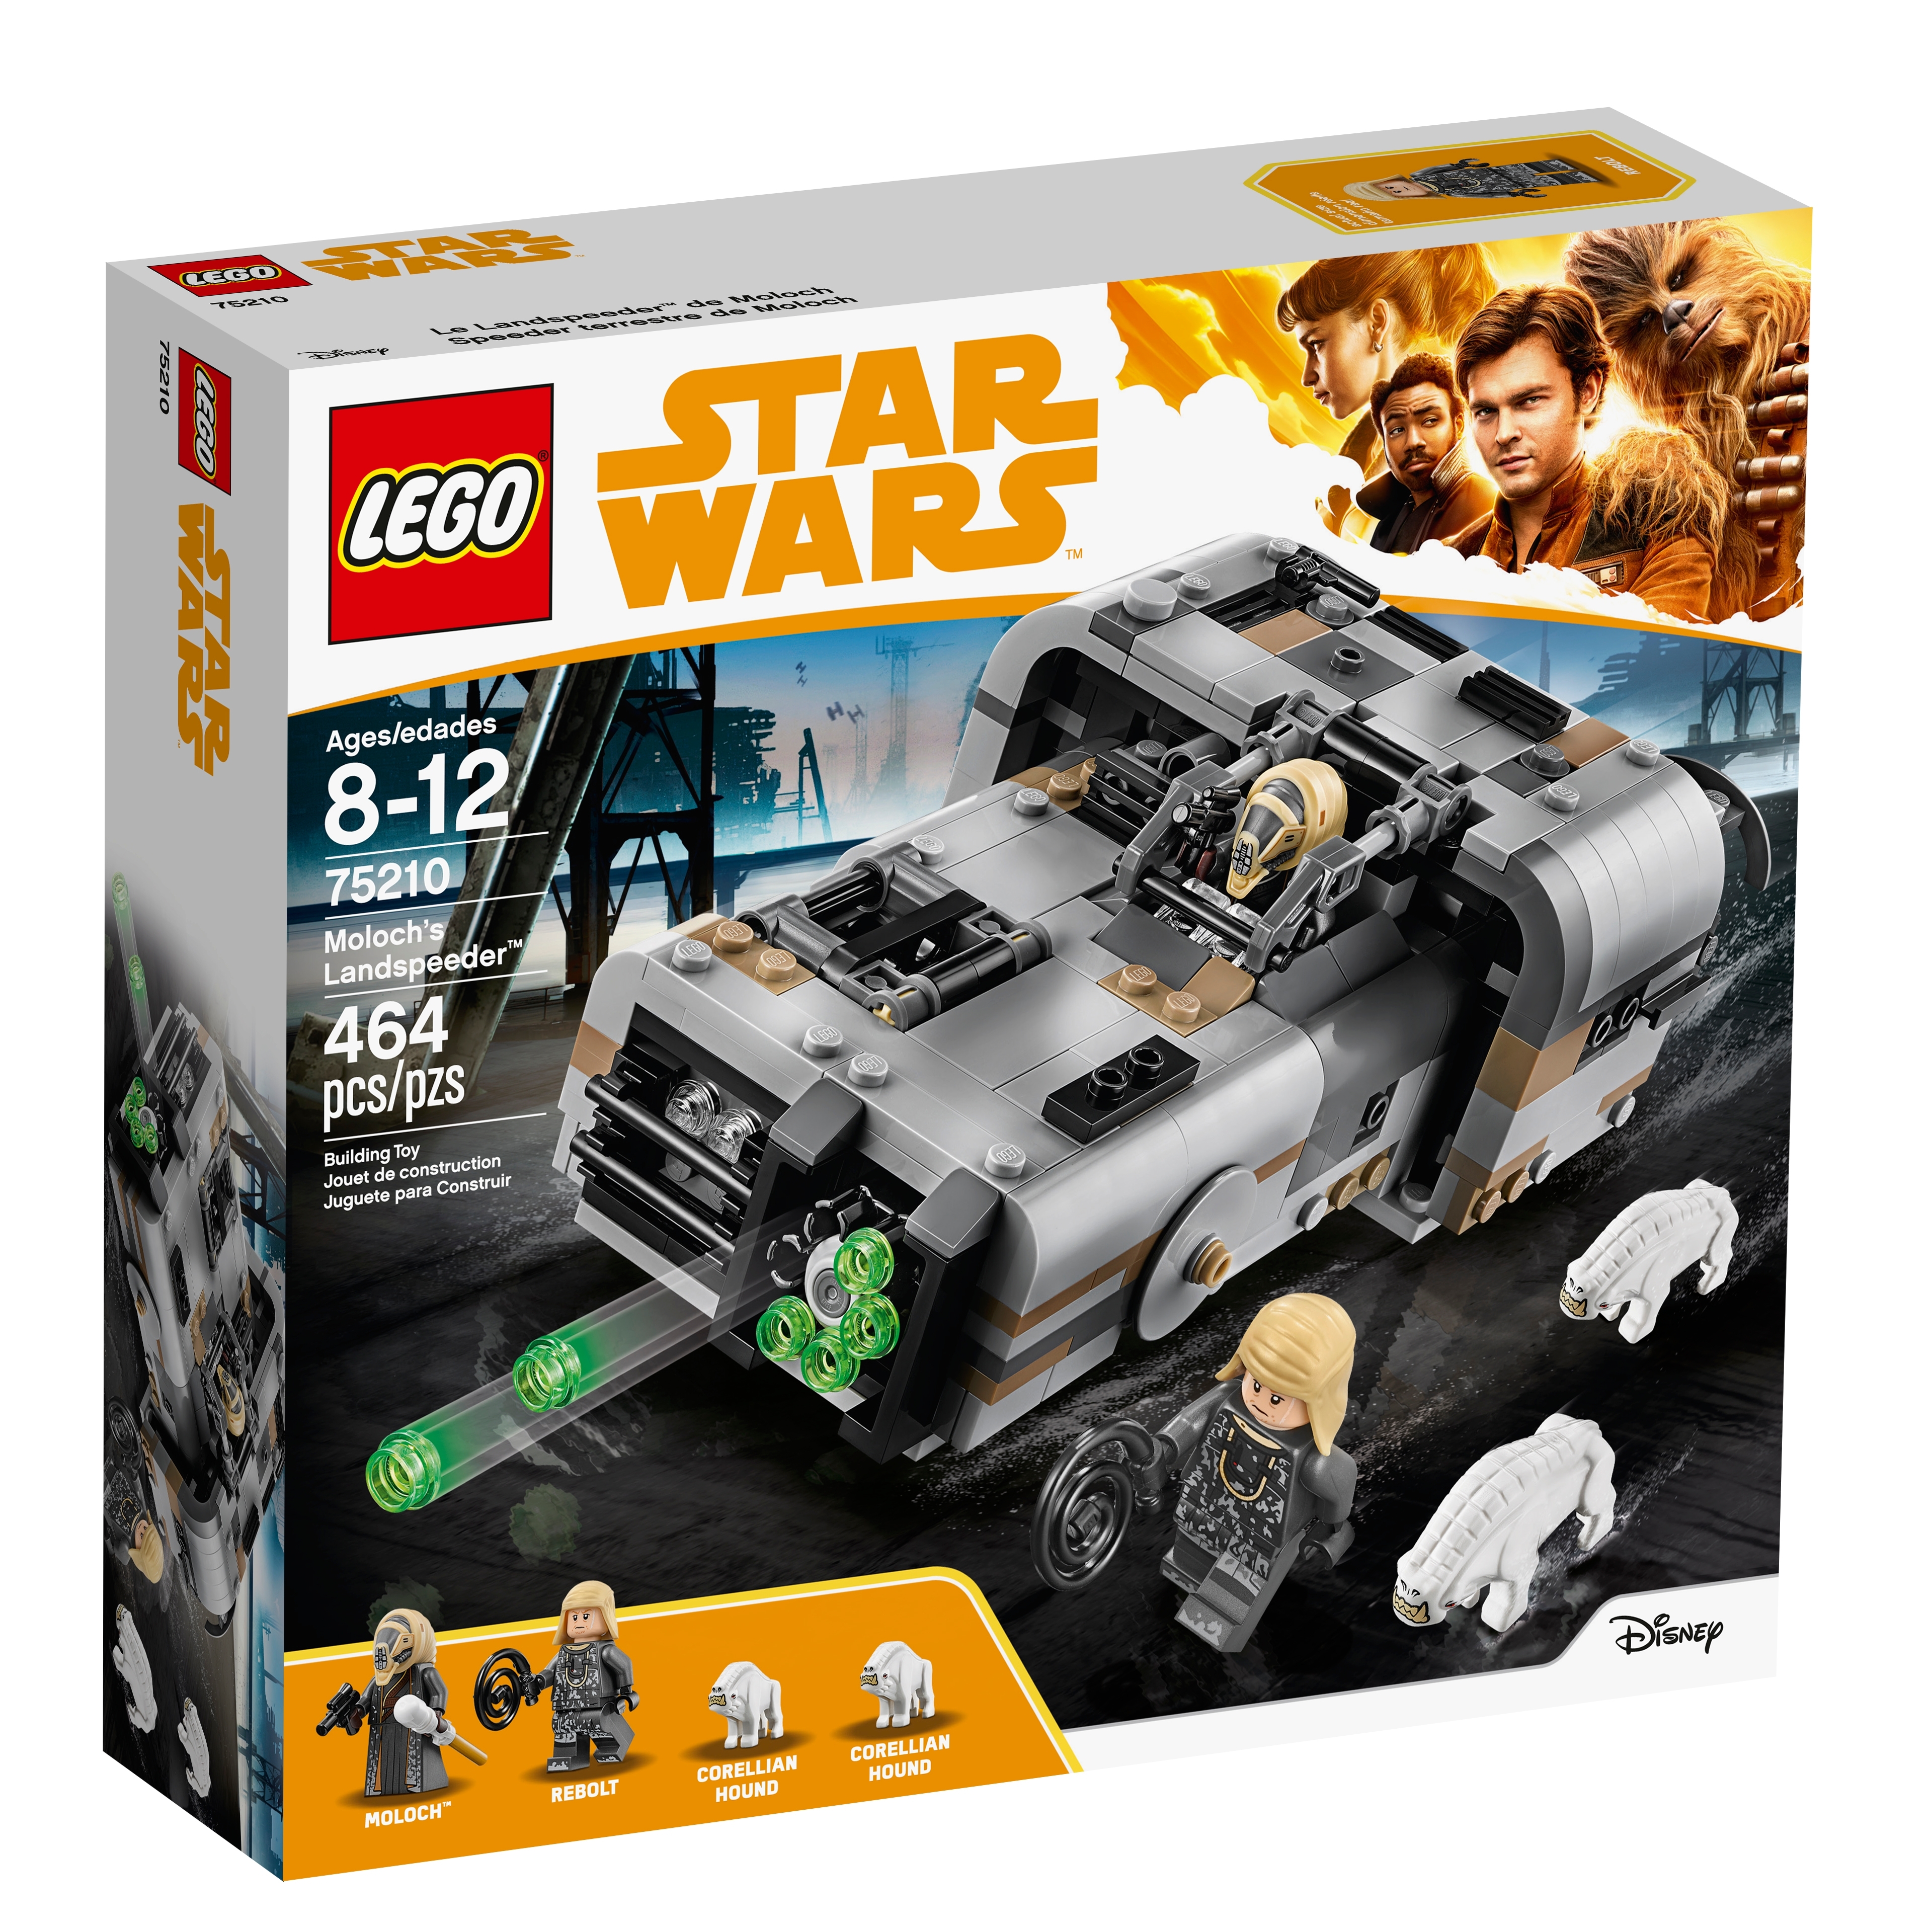 Rebolt - New from set 75210 sw0918 Lego Star Wars Minifigure 